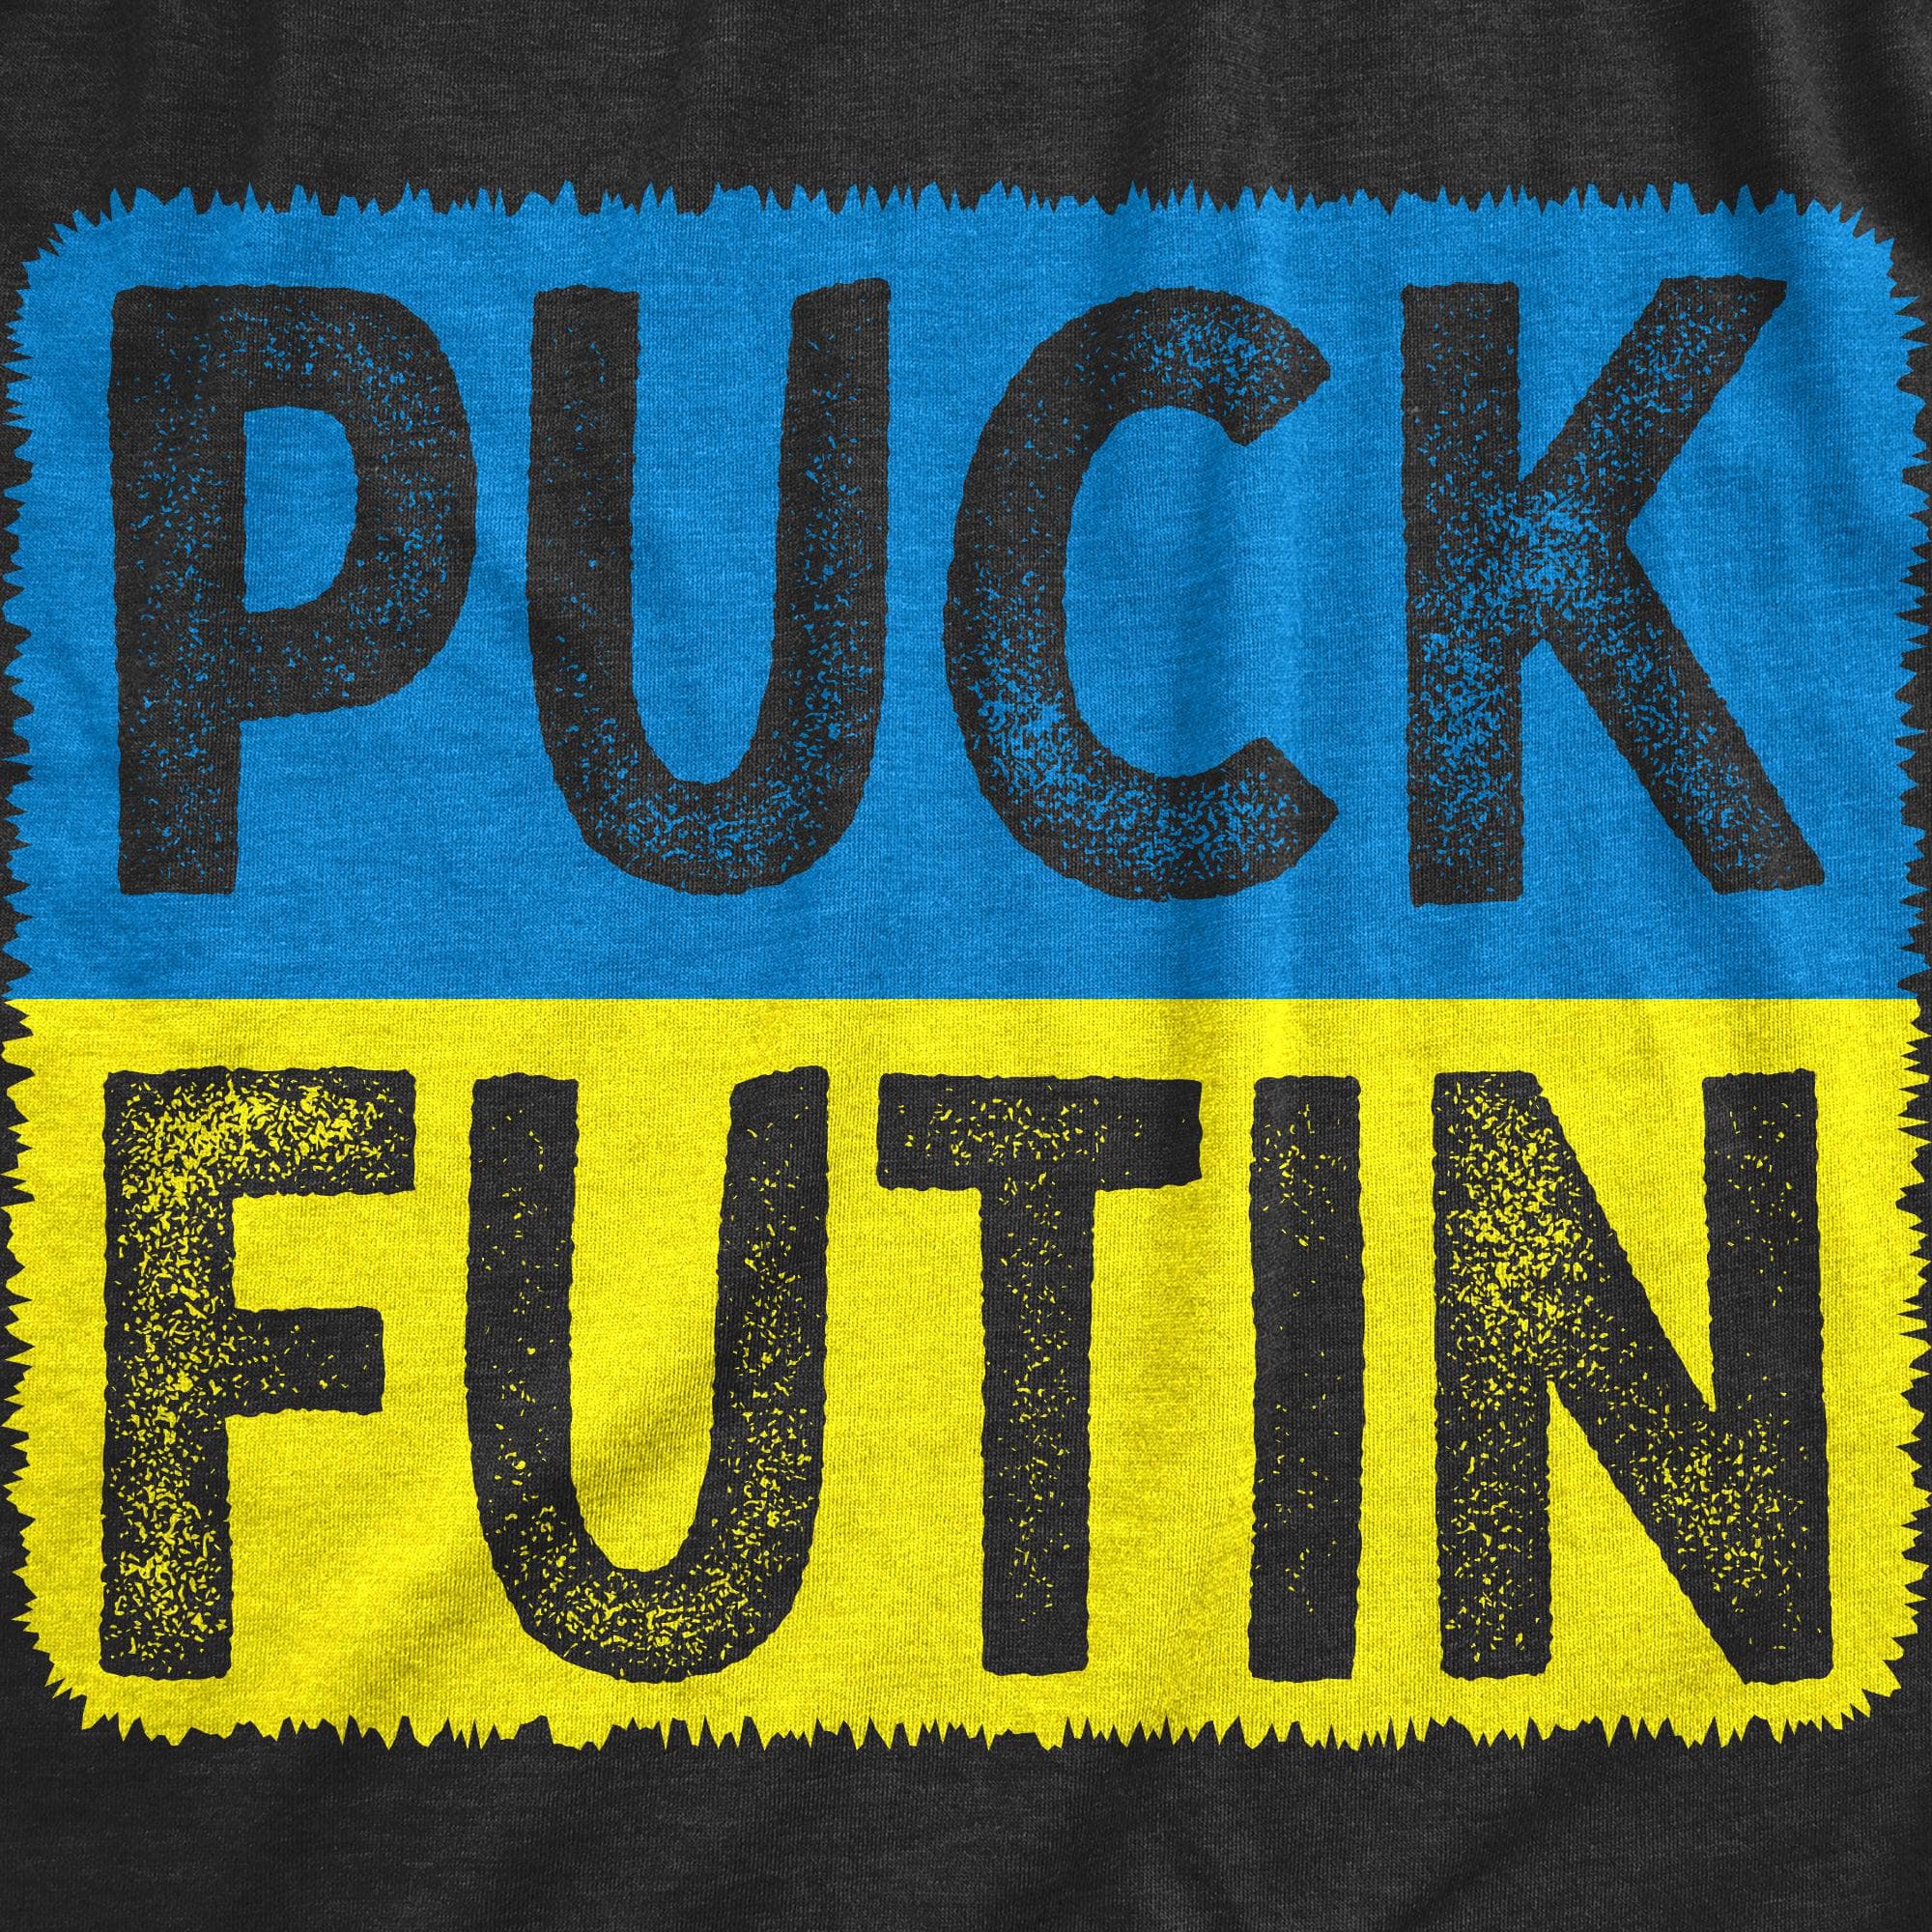 Puck Futin Men's Tshirt  -  Crazy Dog T-Shirts